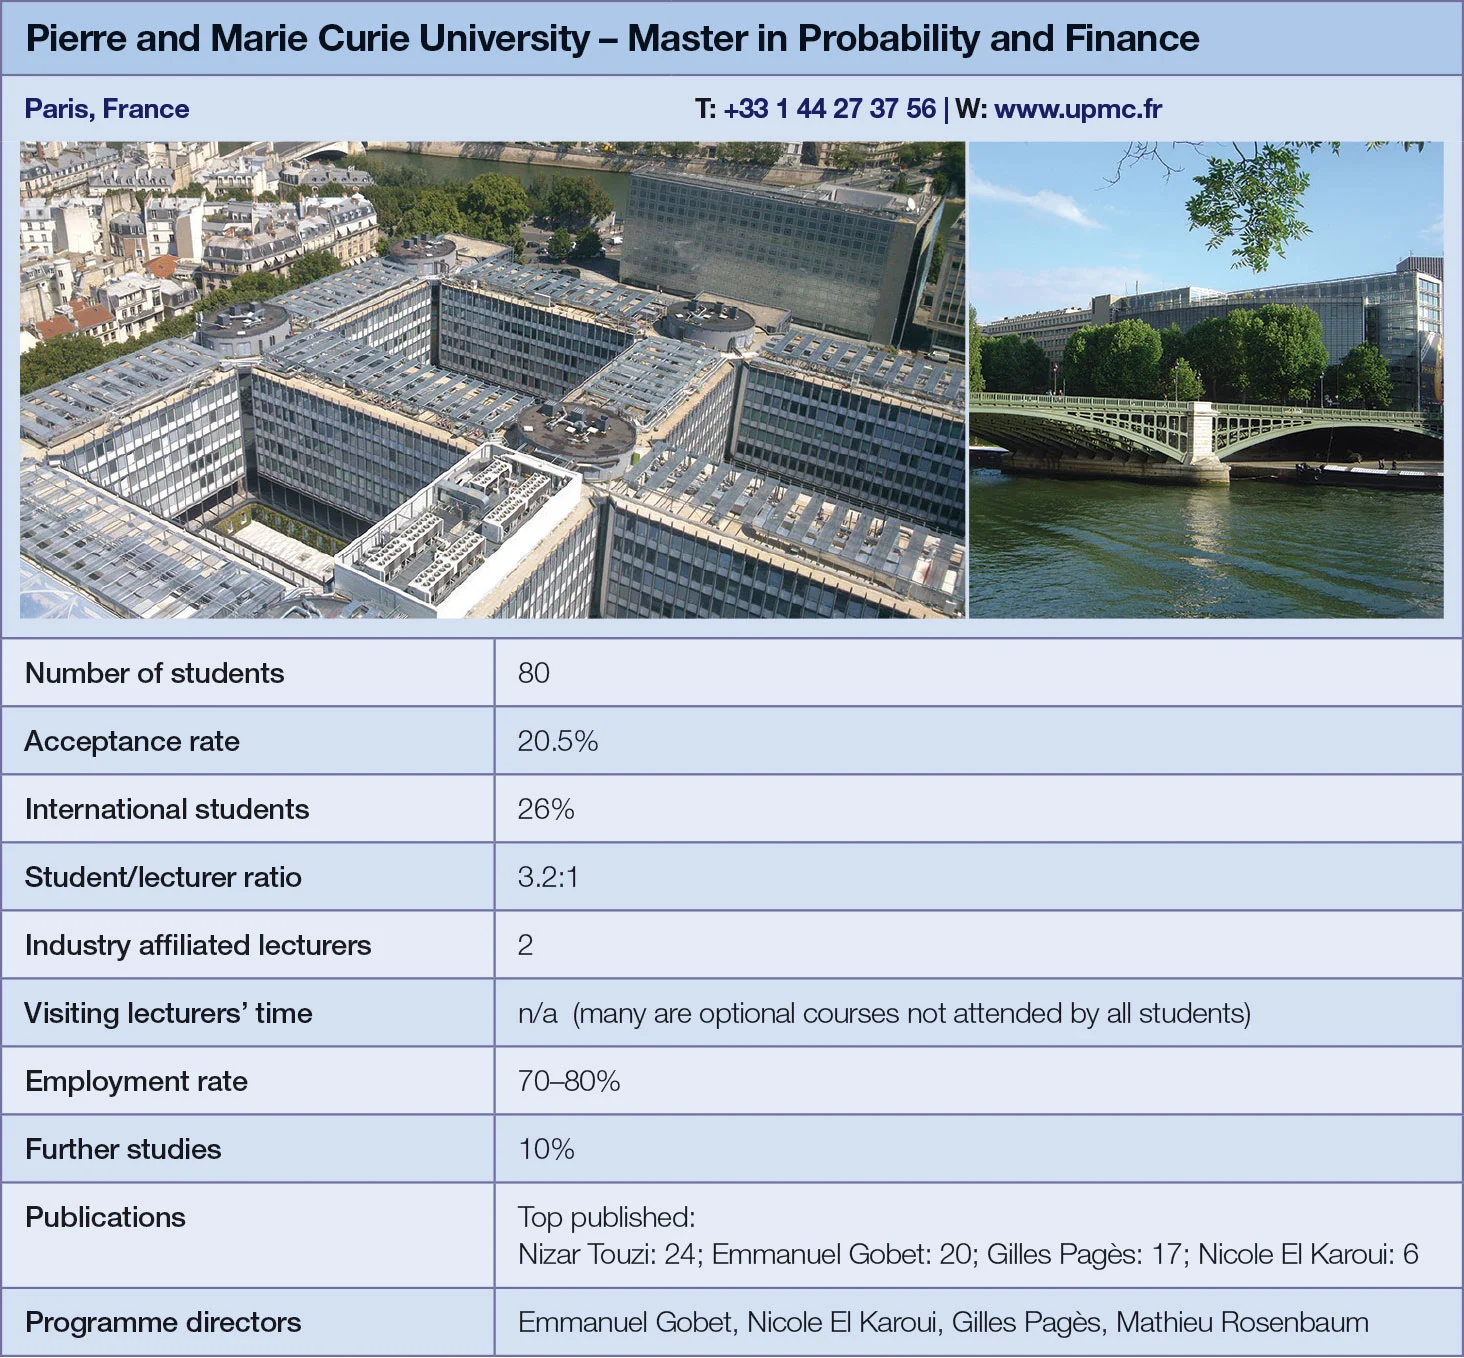 Pierre and Marie Curie University metrics